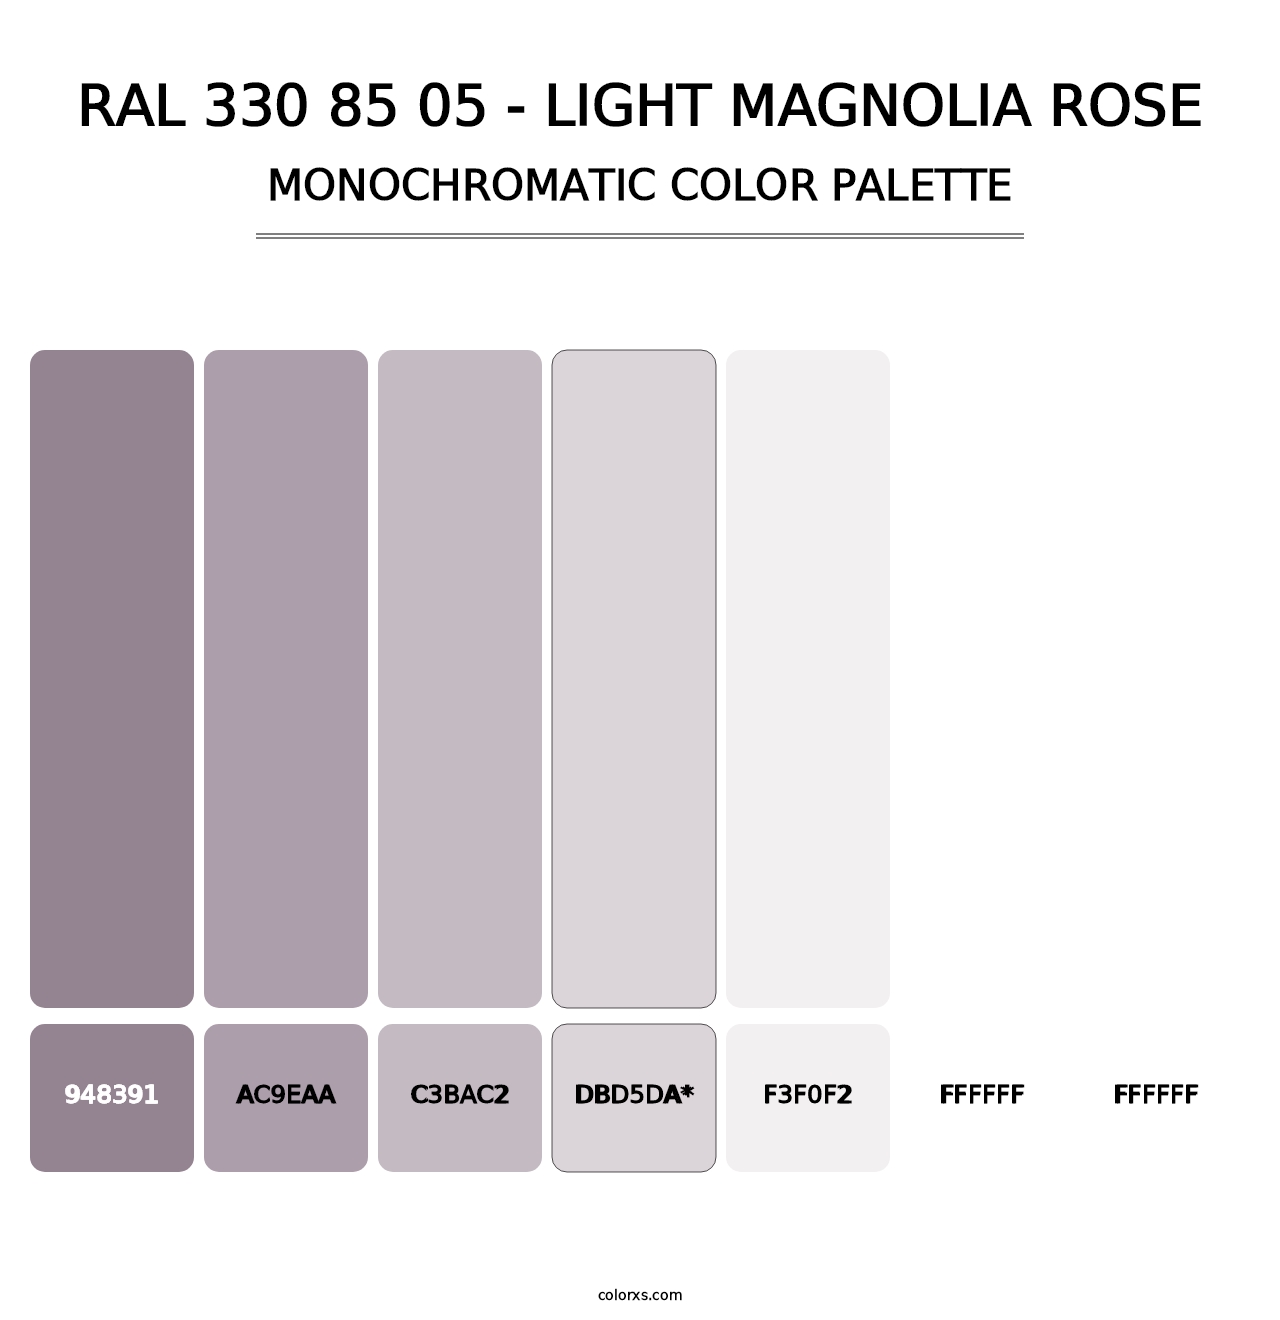 RAL 330 85 05 - Light Magnolia Rose - Monochromatic Color Palette